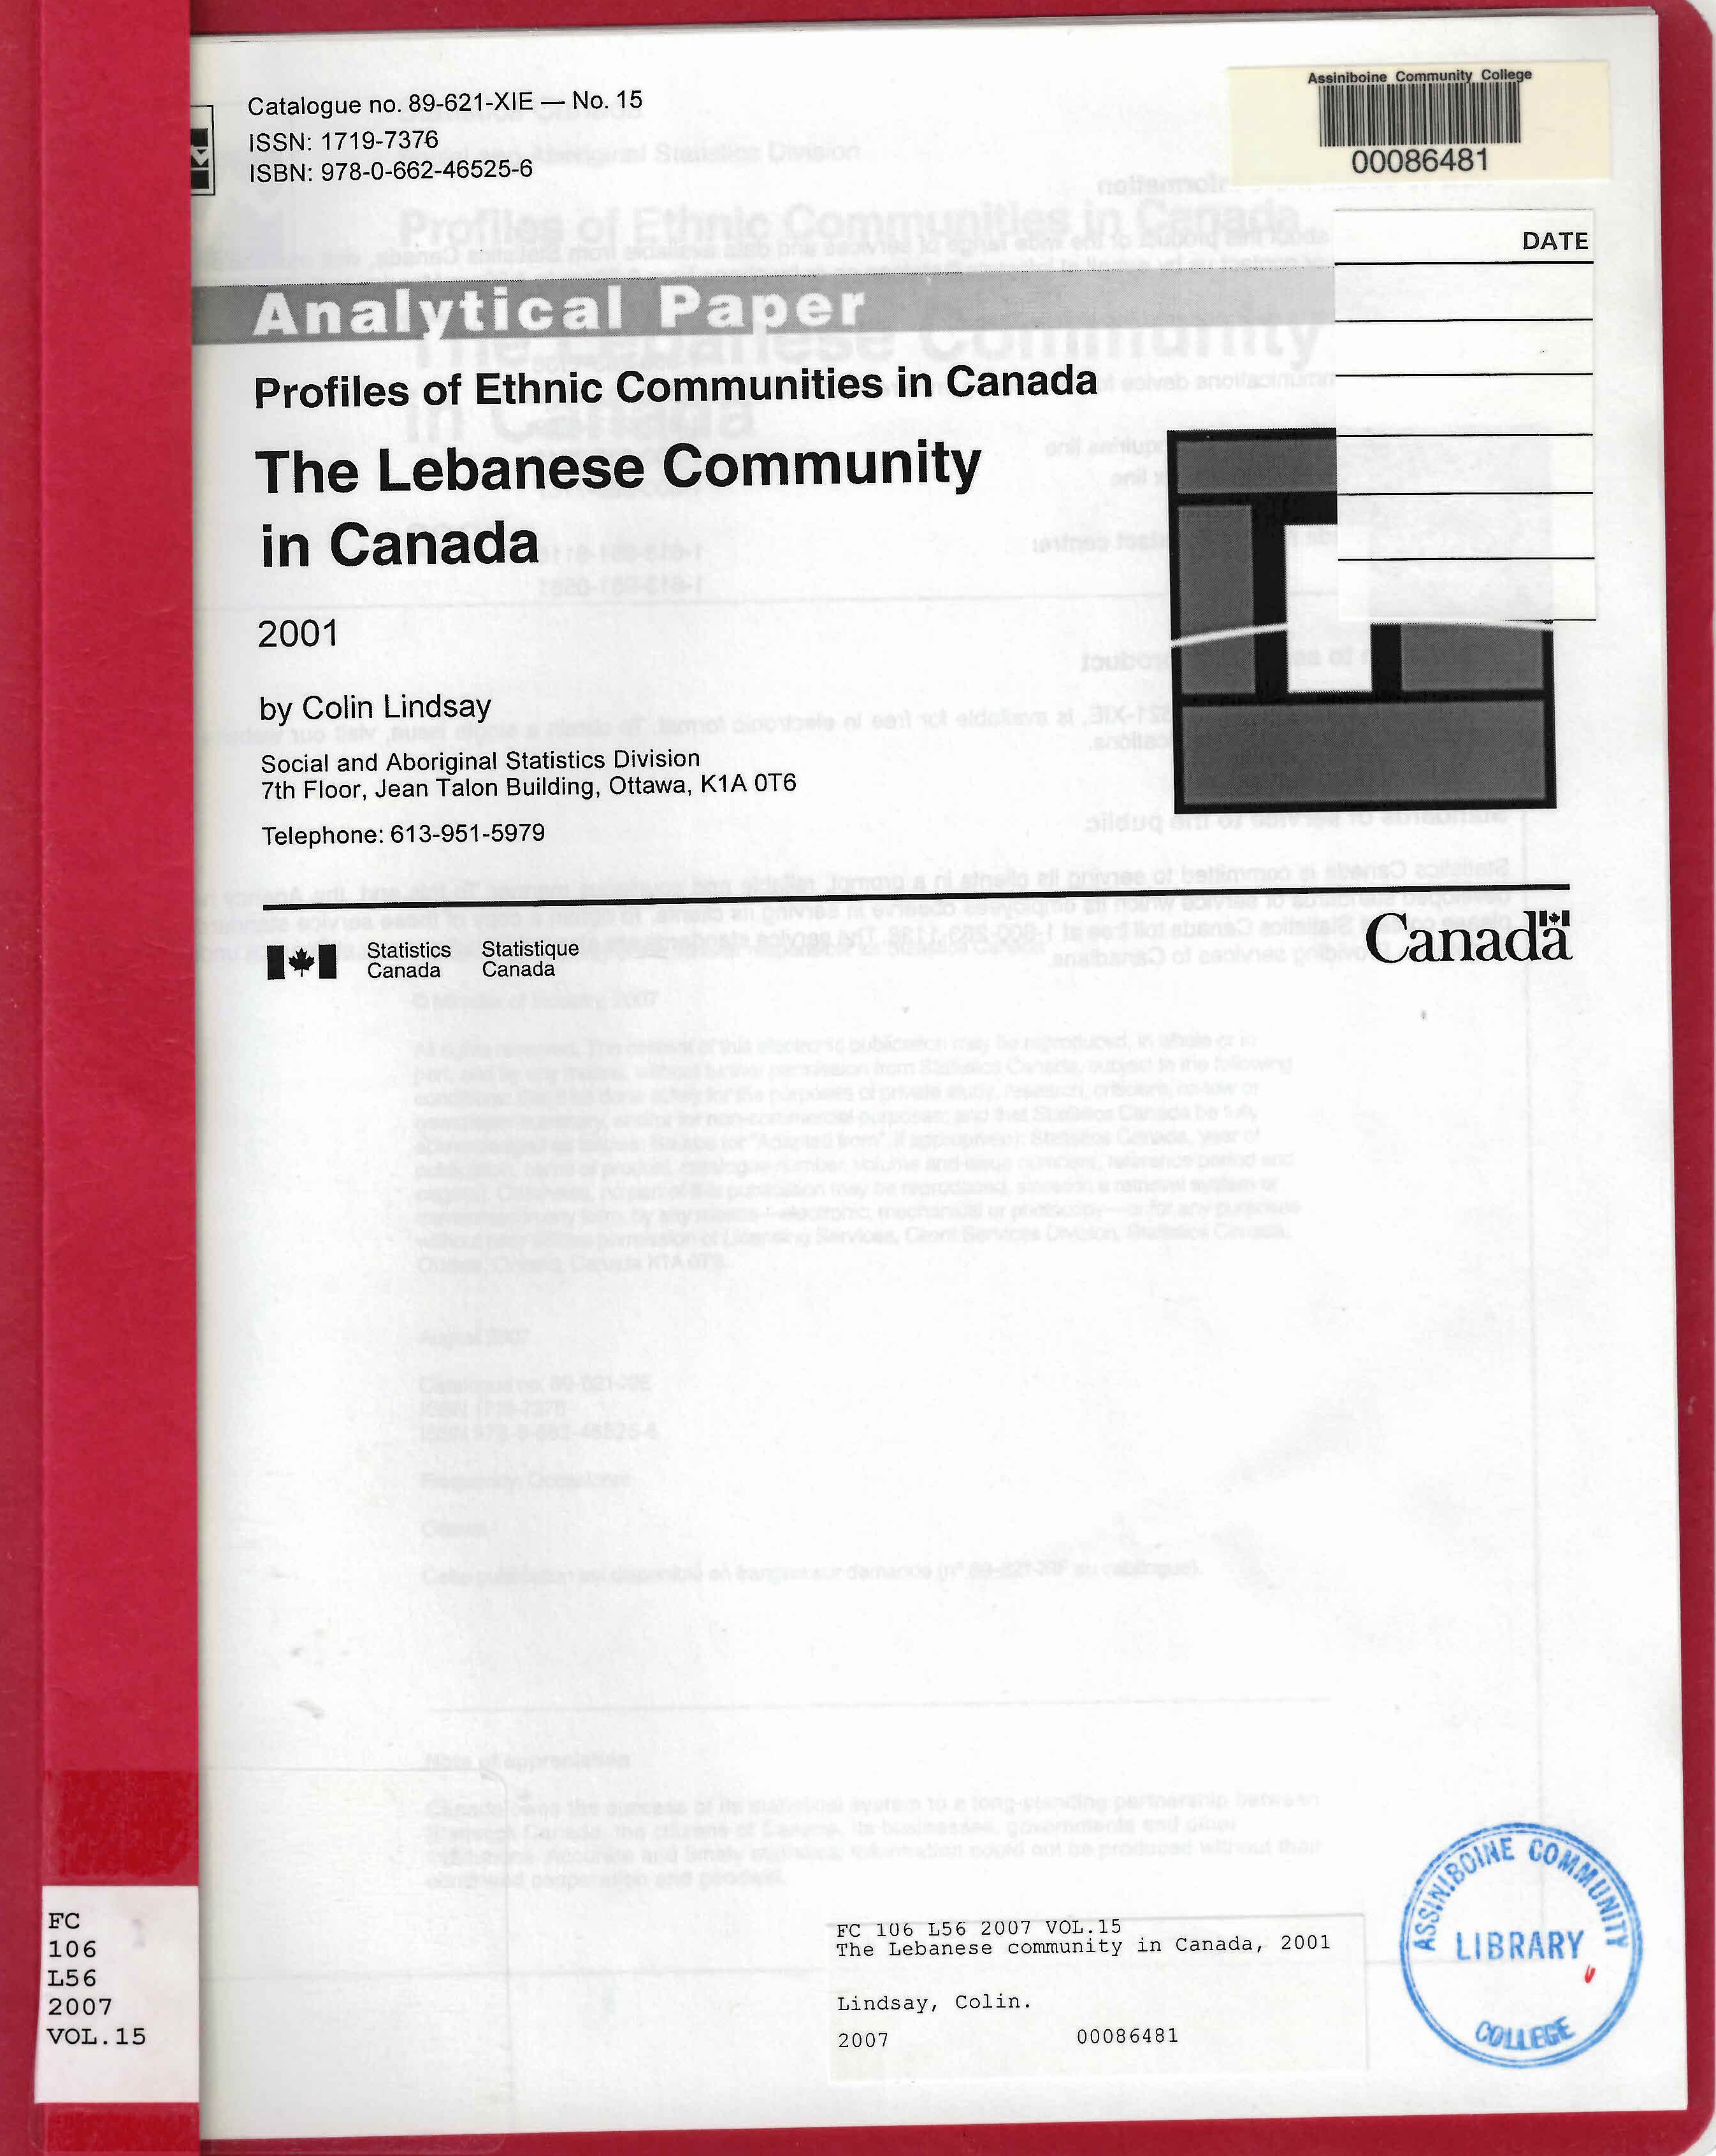 The Lebanese community in Canada, 2001